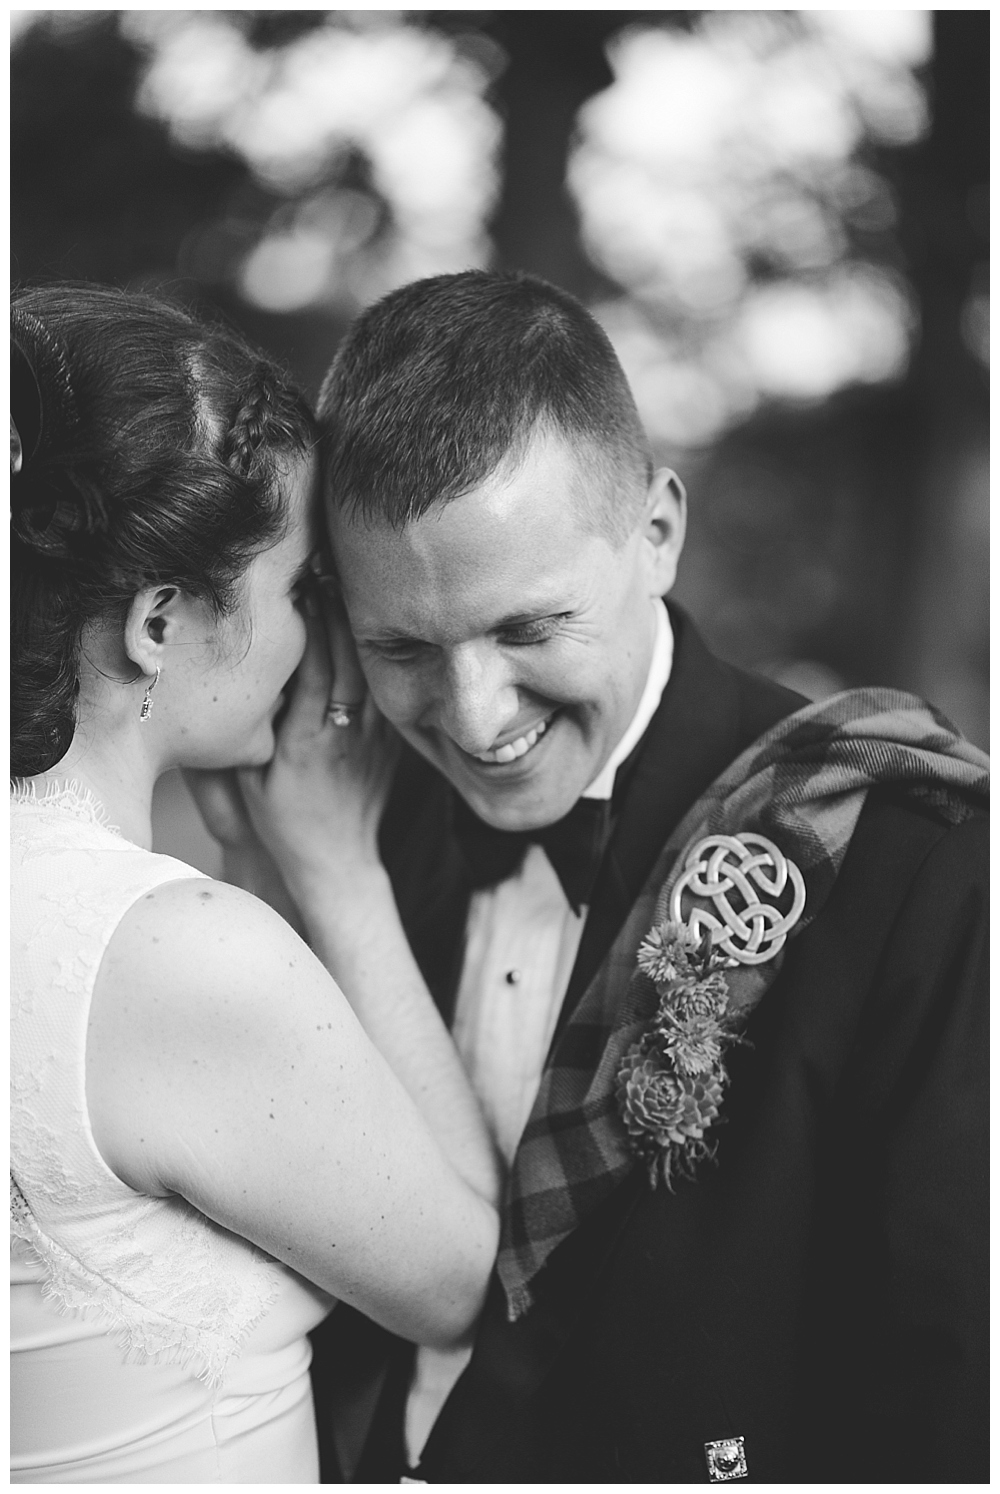 bride and groom in kilt portrait backlight Virginia Theological Seminary